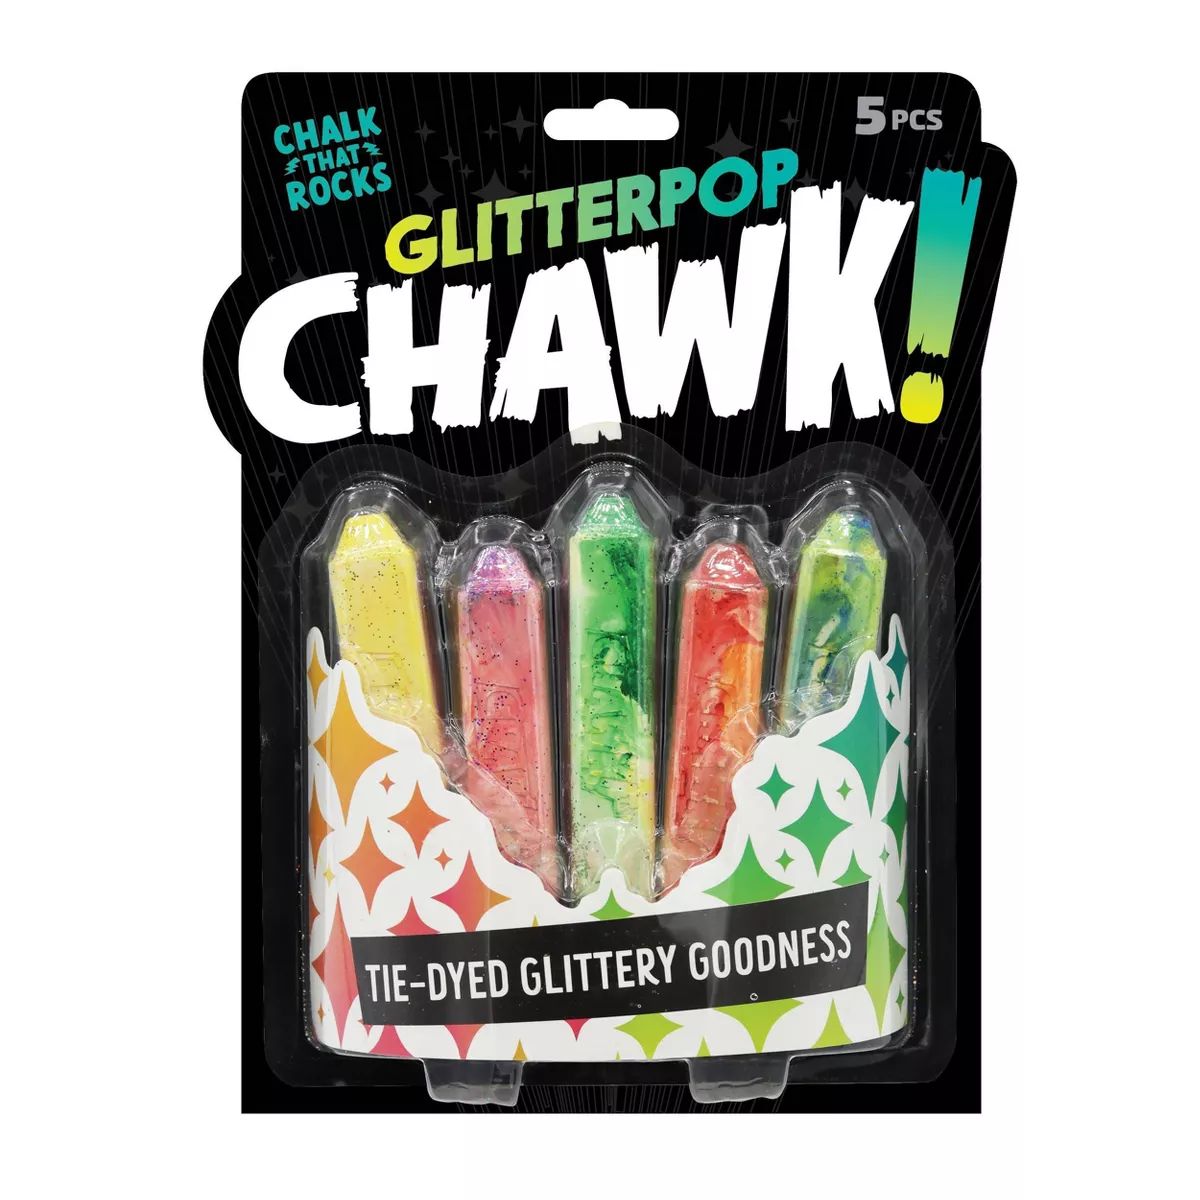 Chuckle & Roar Glitterpop Chawk! Sidewalk Chalk - 5ct | Target